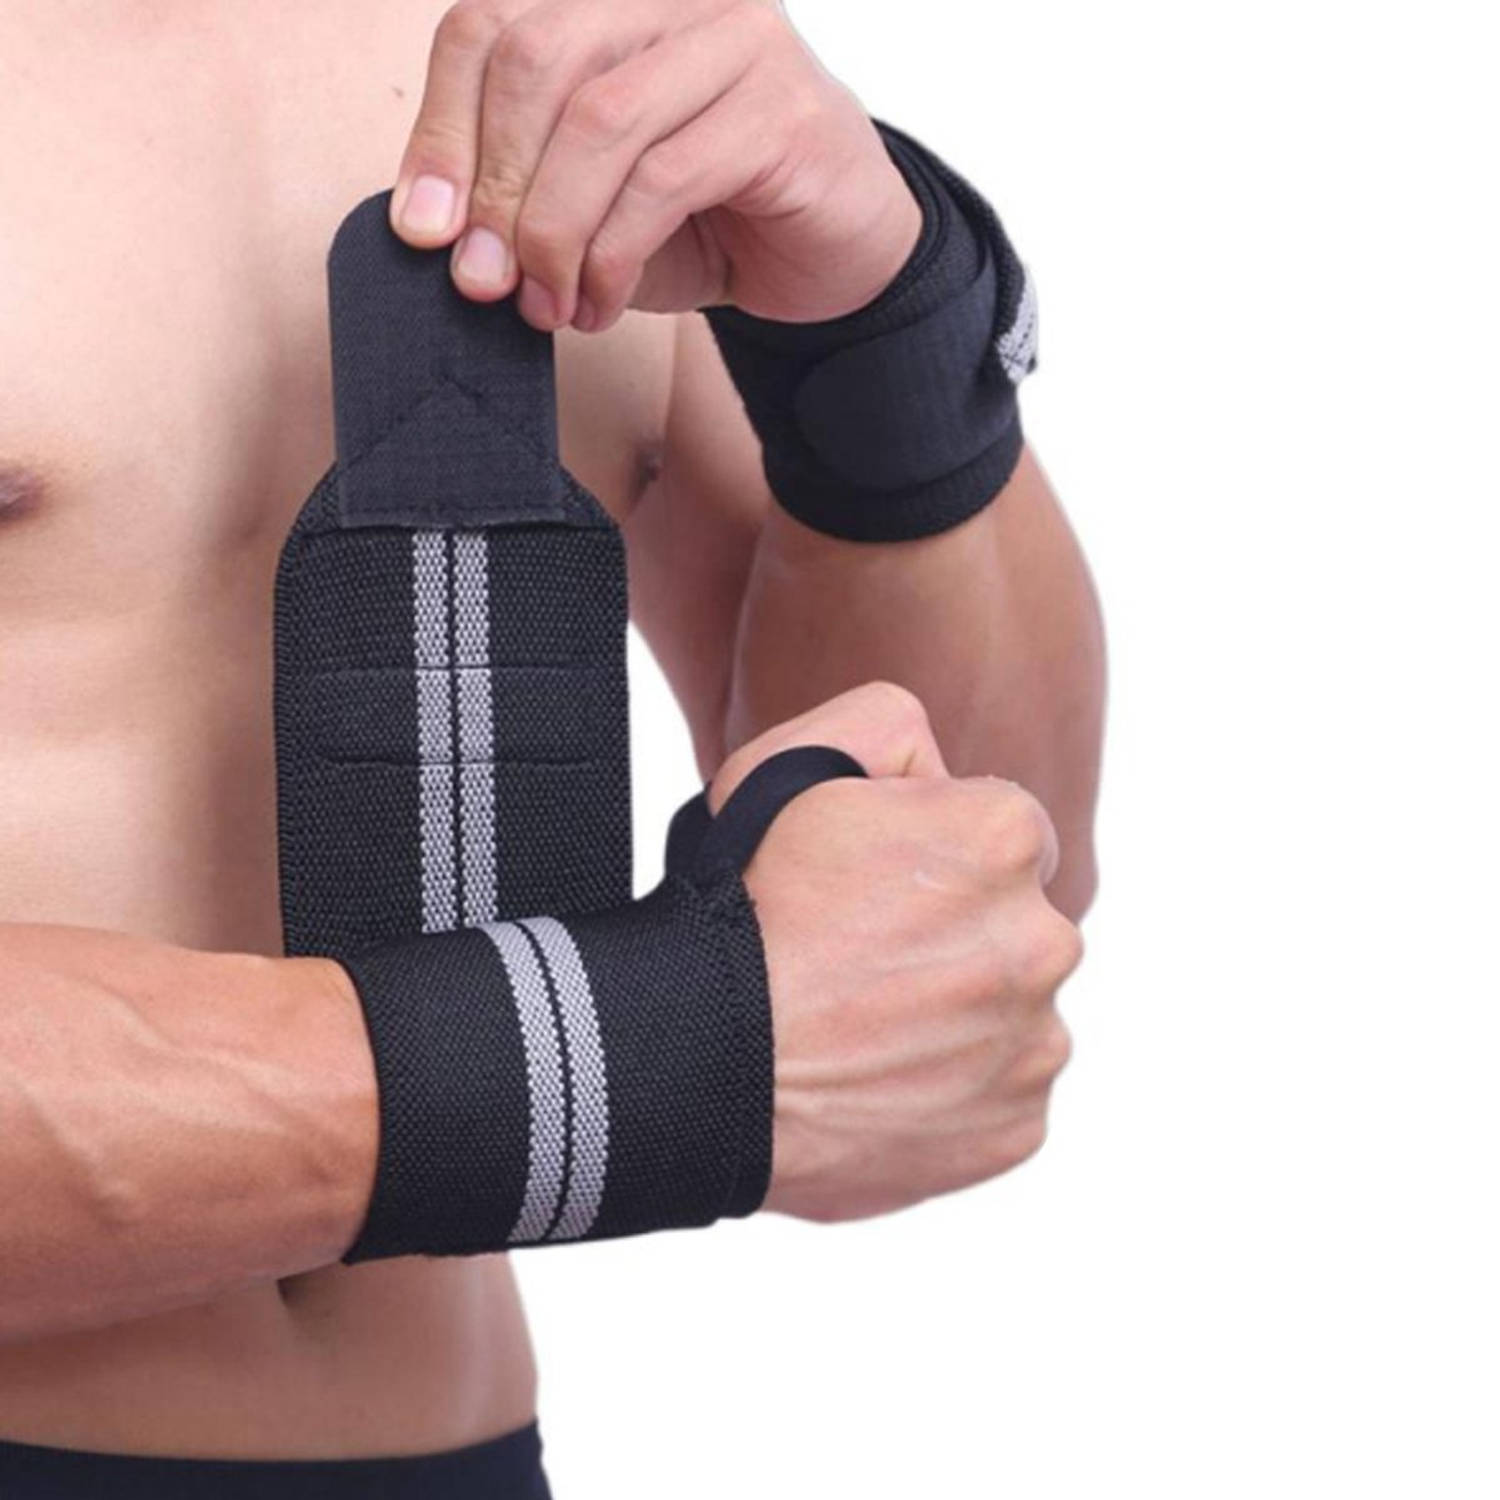 Pogo stick sprong Offer Helaas Fitness / Crossfit Polsband Polsbandage Wrist Support Wraps | Blokker